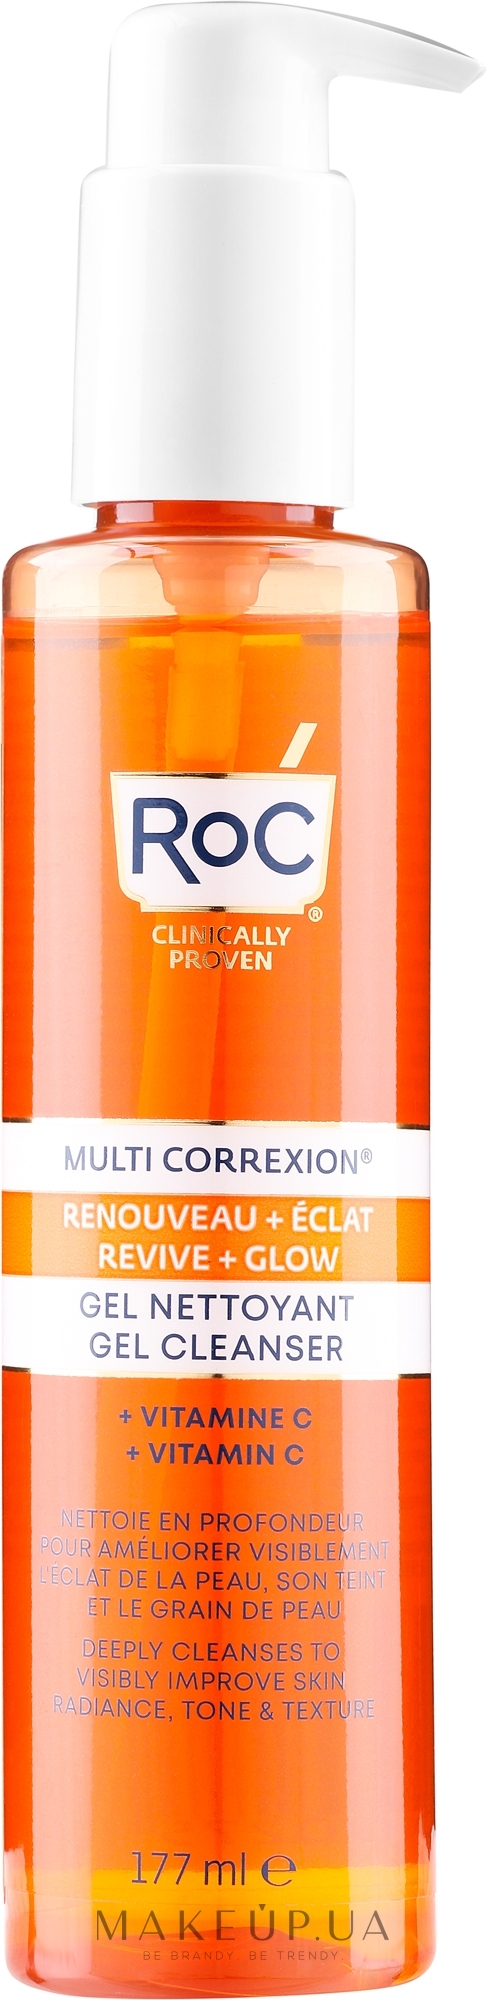 Очищающий гель для лица - RoC Multi Correxion Revive + Glow Gel Cleanser — фото 177ml